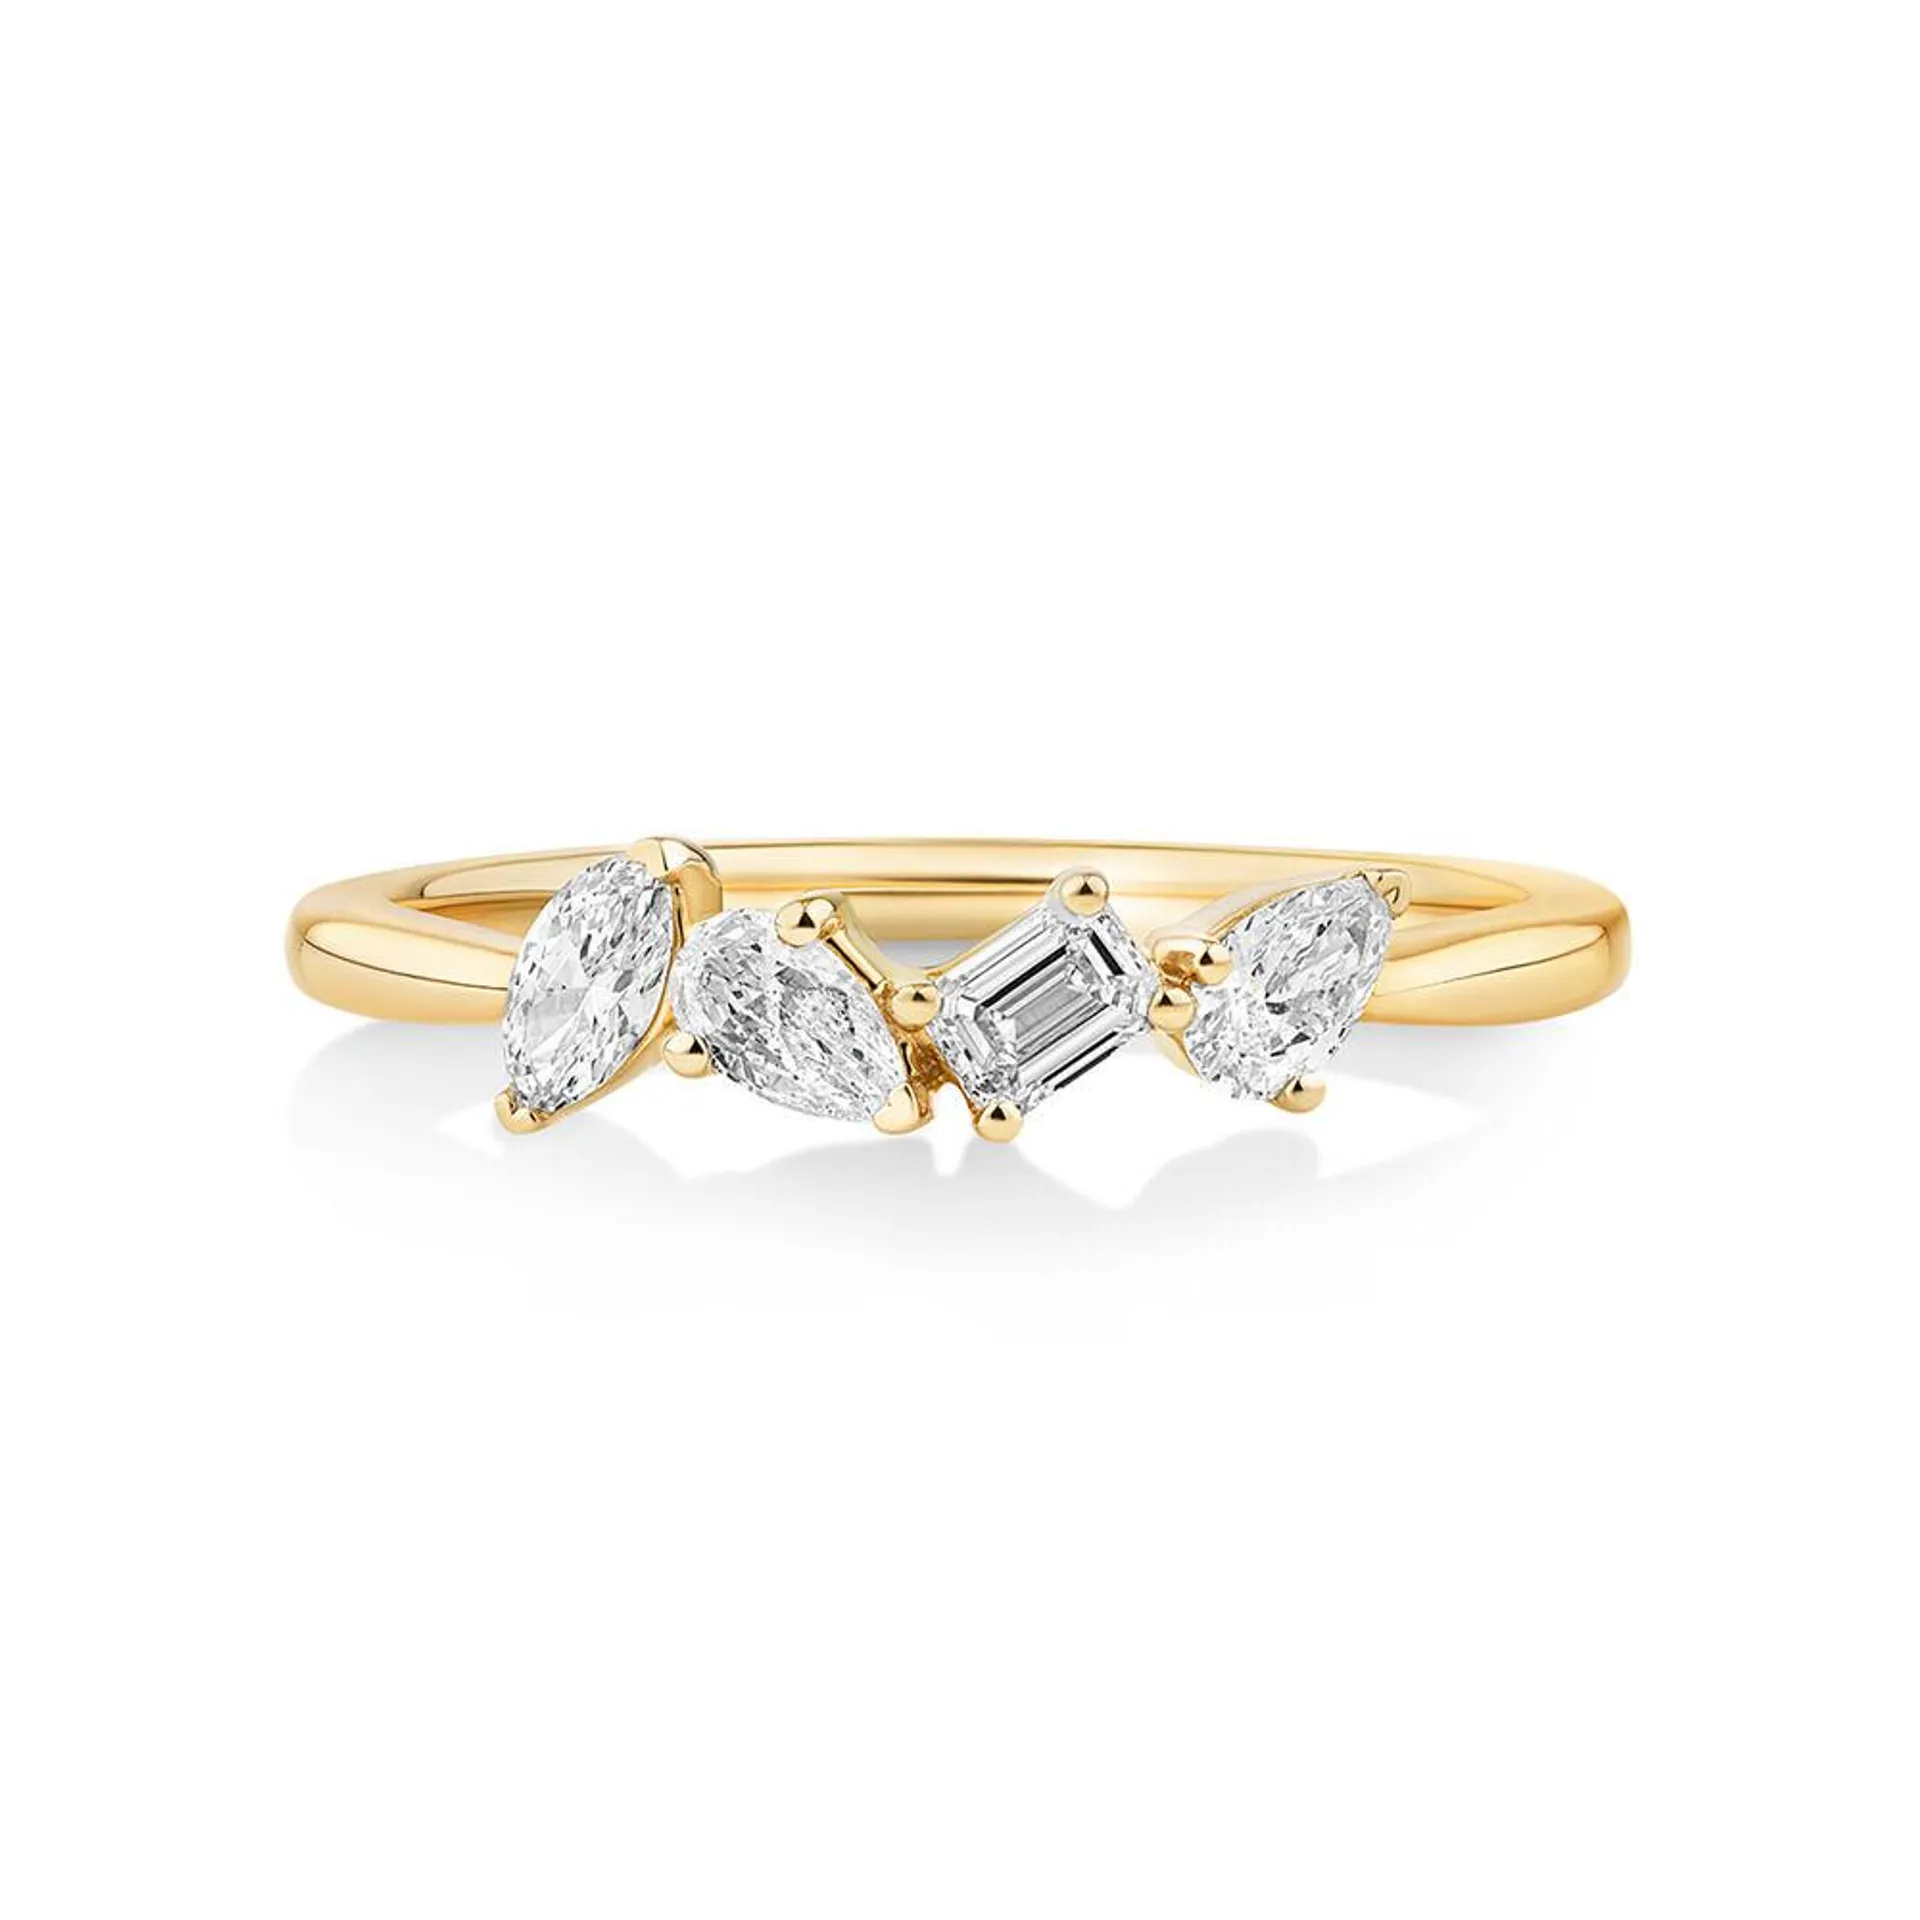 0.40 Carat TW Fancy Cut Laboratory-Grown Diamond Four Stone Ring in 10kt Yellow Gold